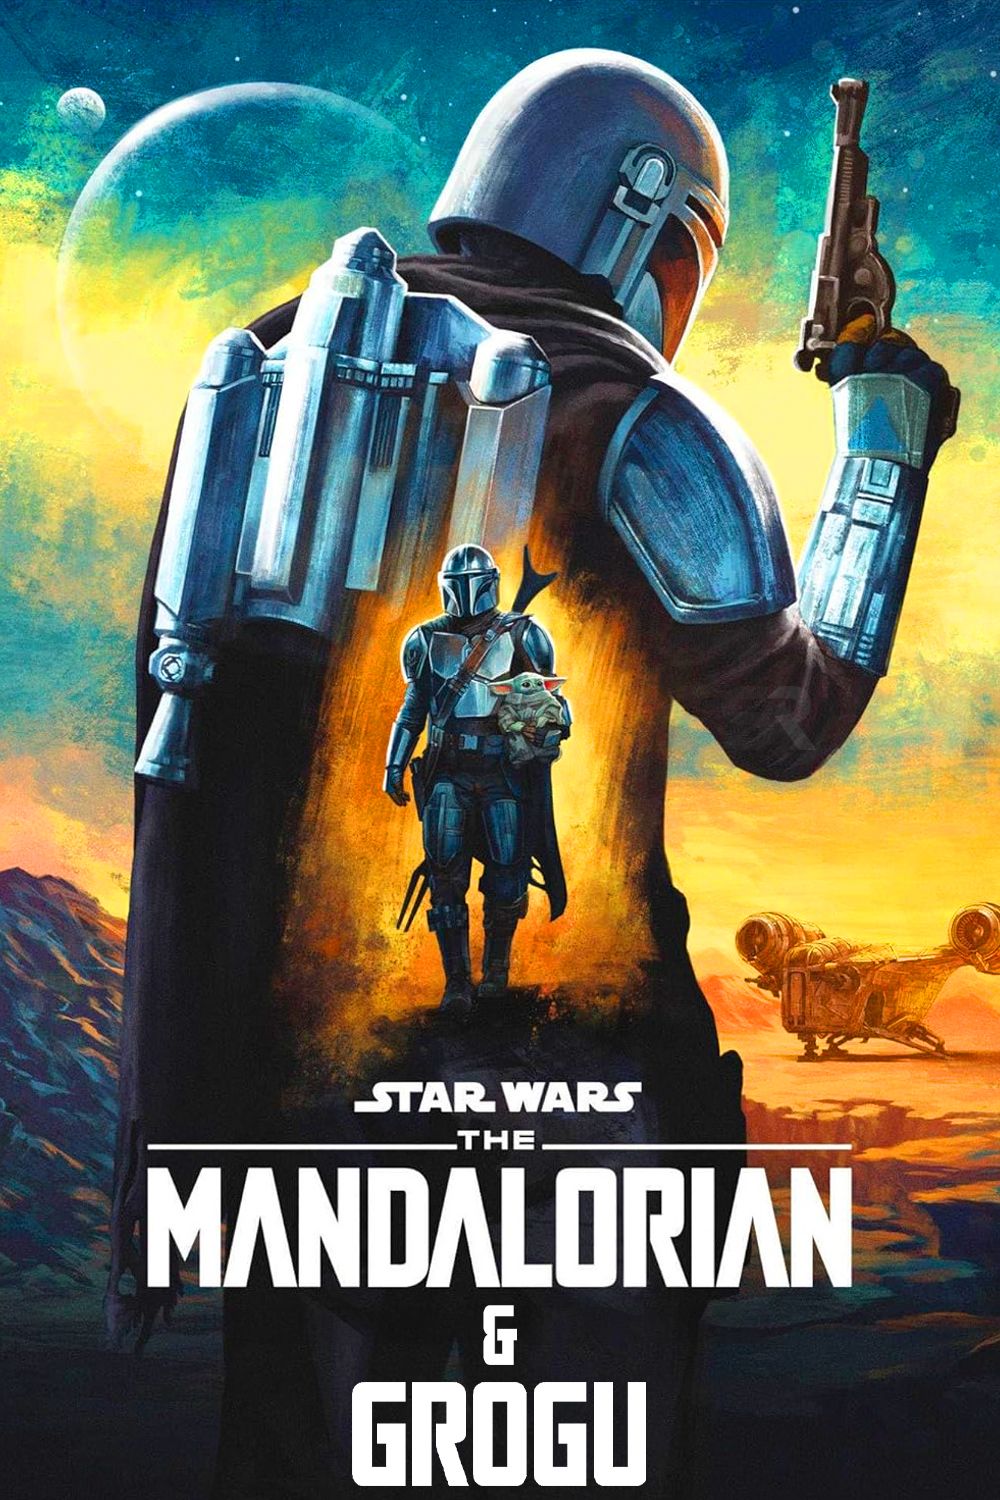 The Mandalorian and Grogu Poster